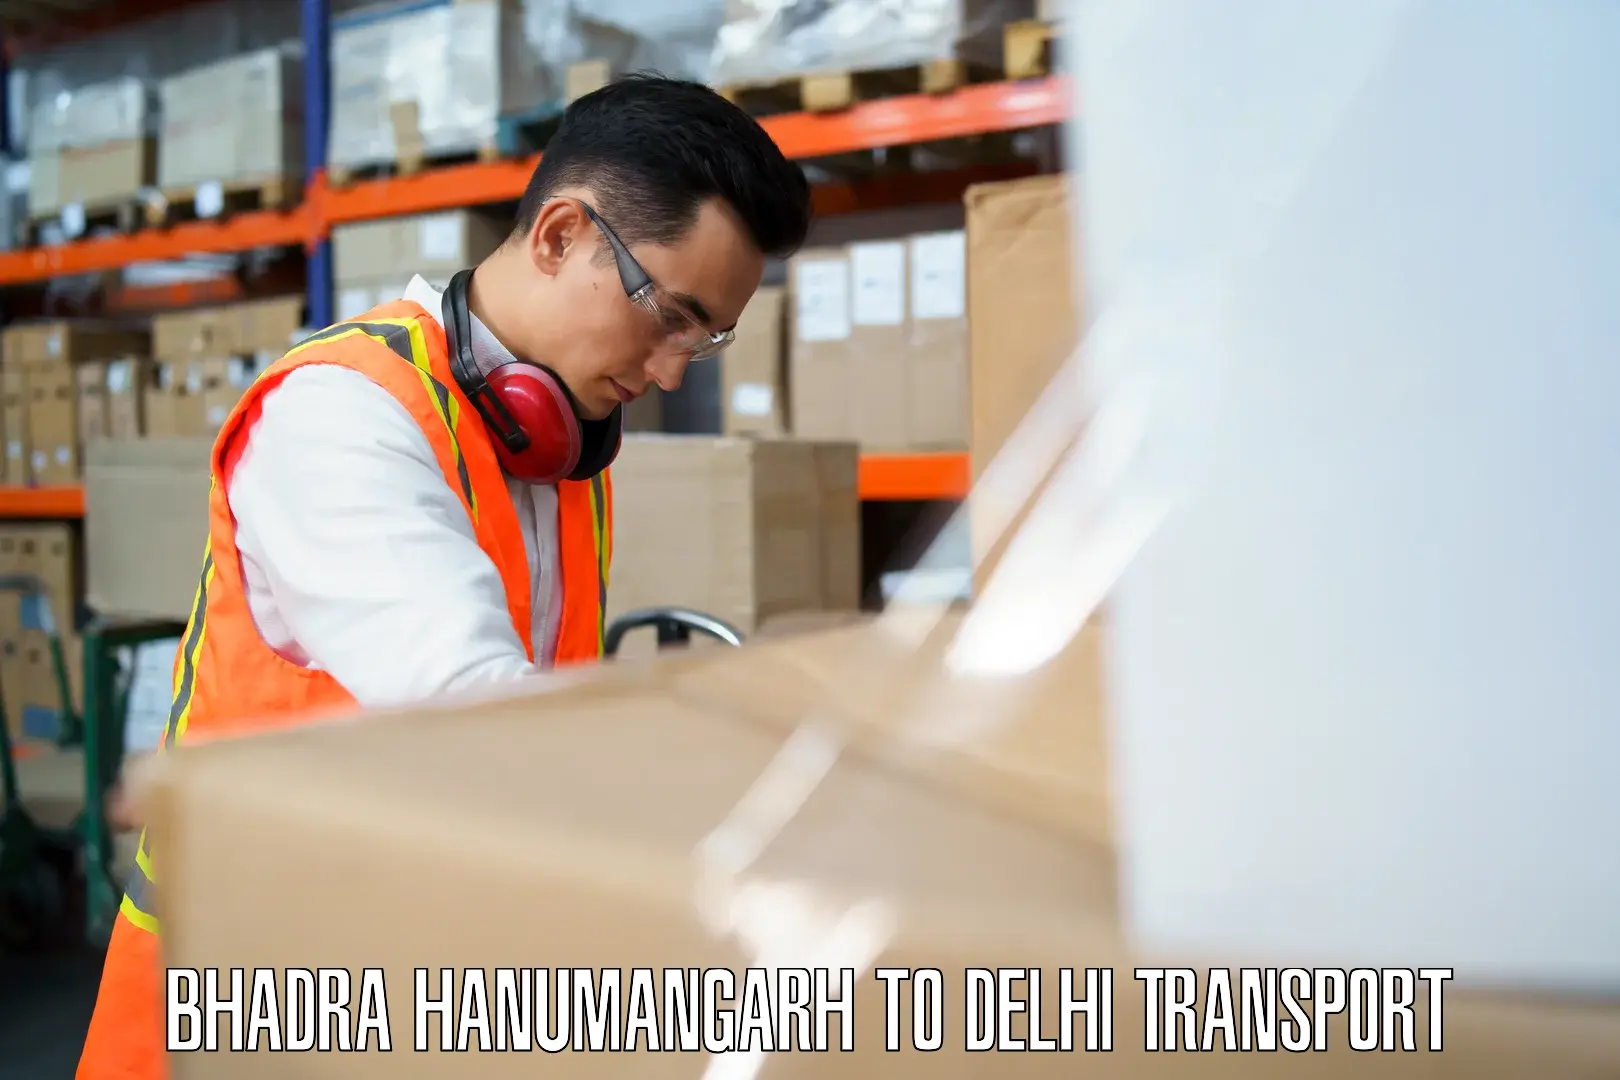 Furniture transport service Bhadra Hanumangarh to Delhi